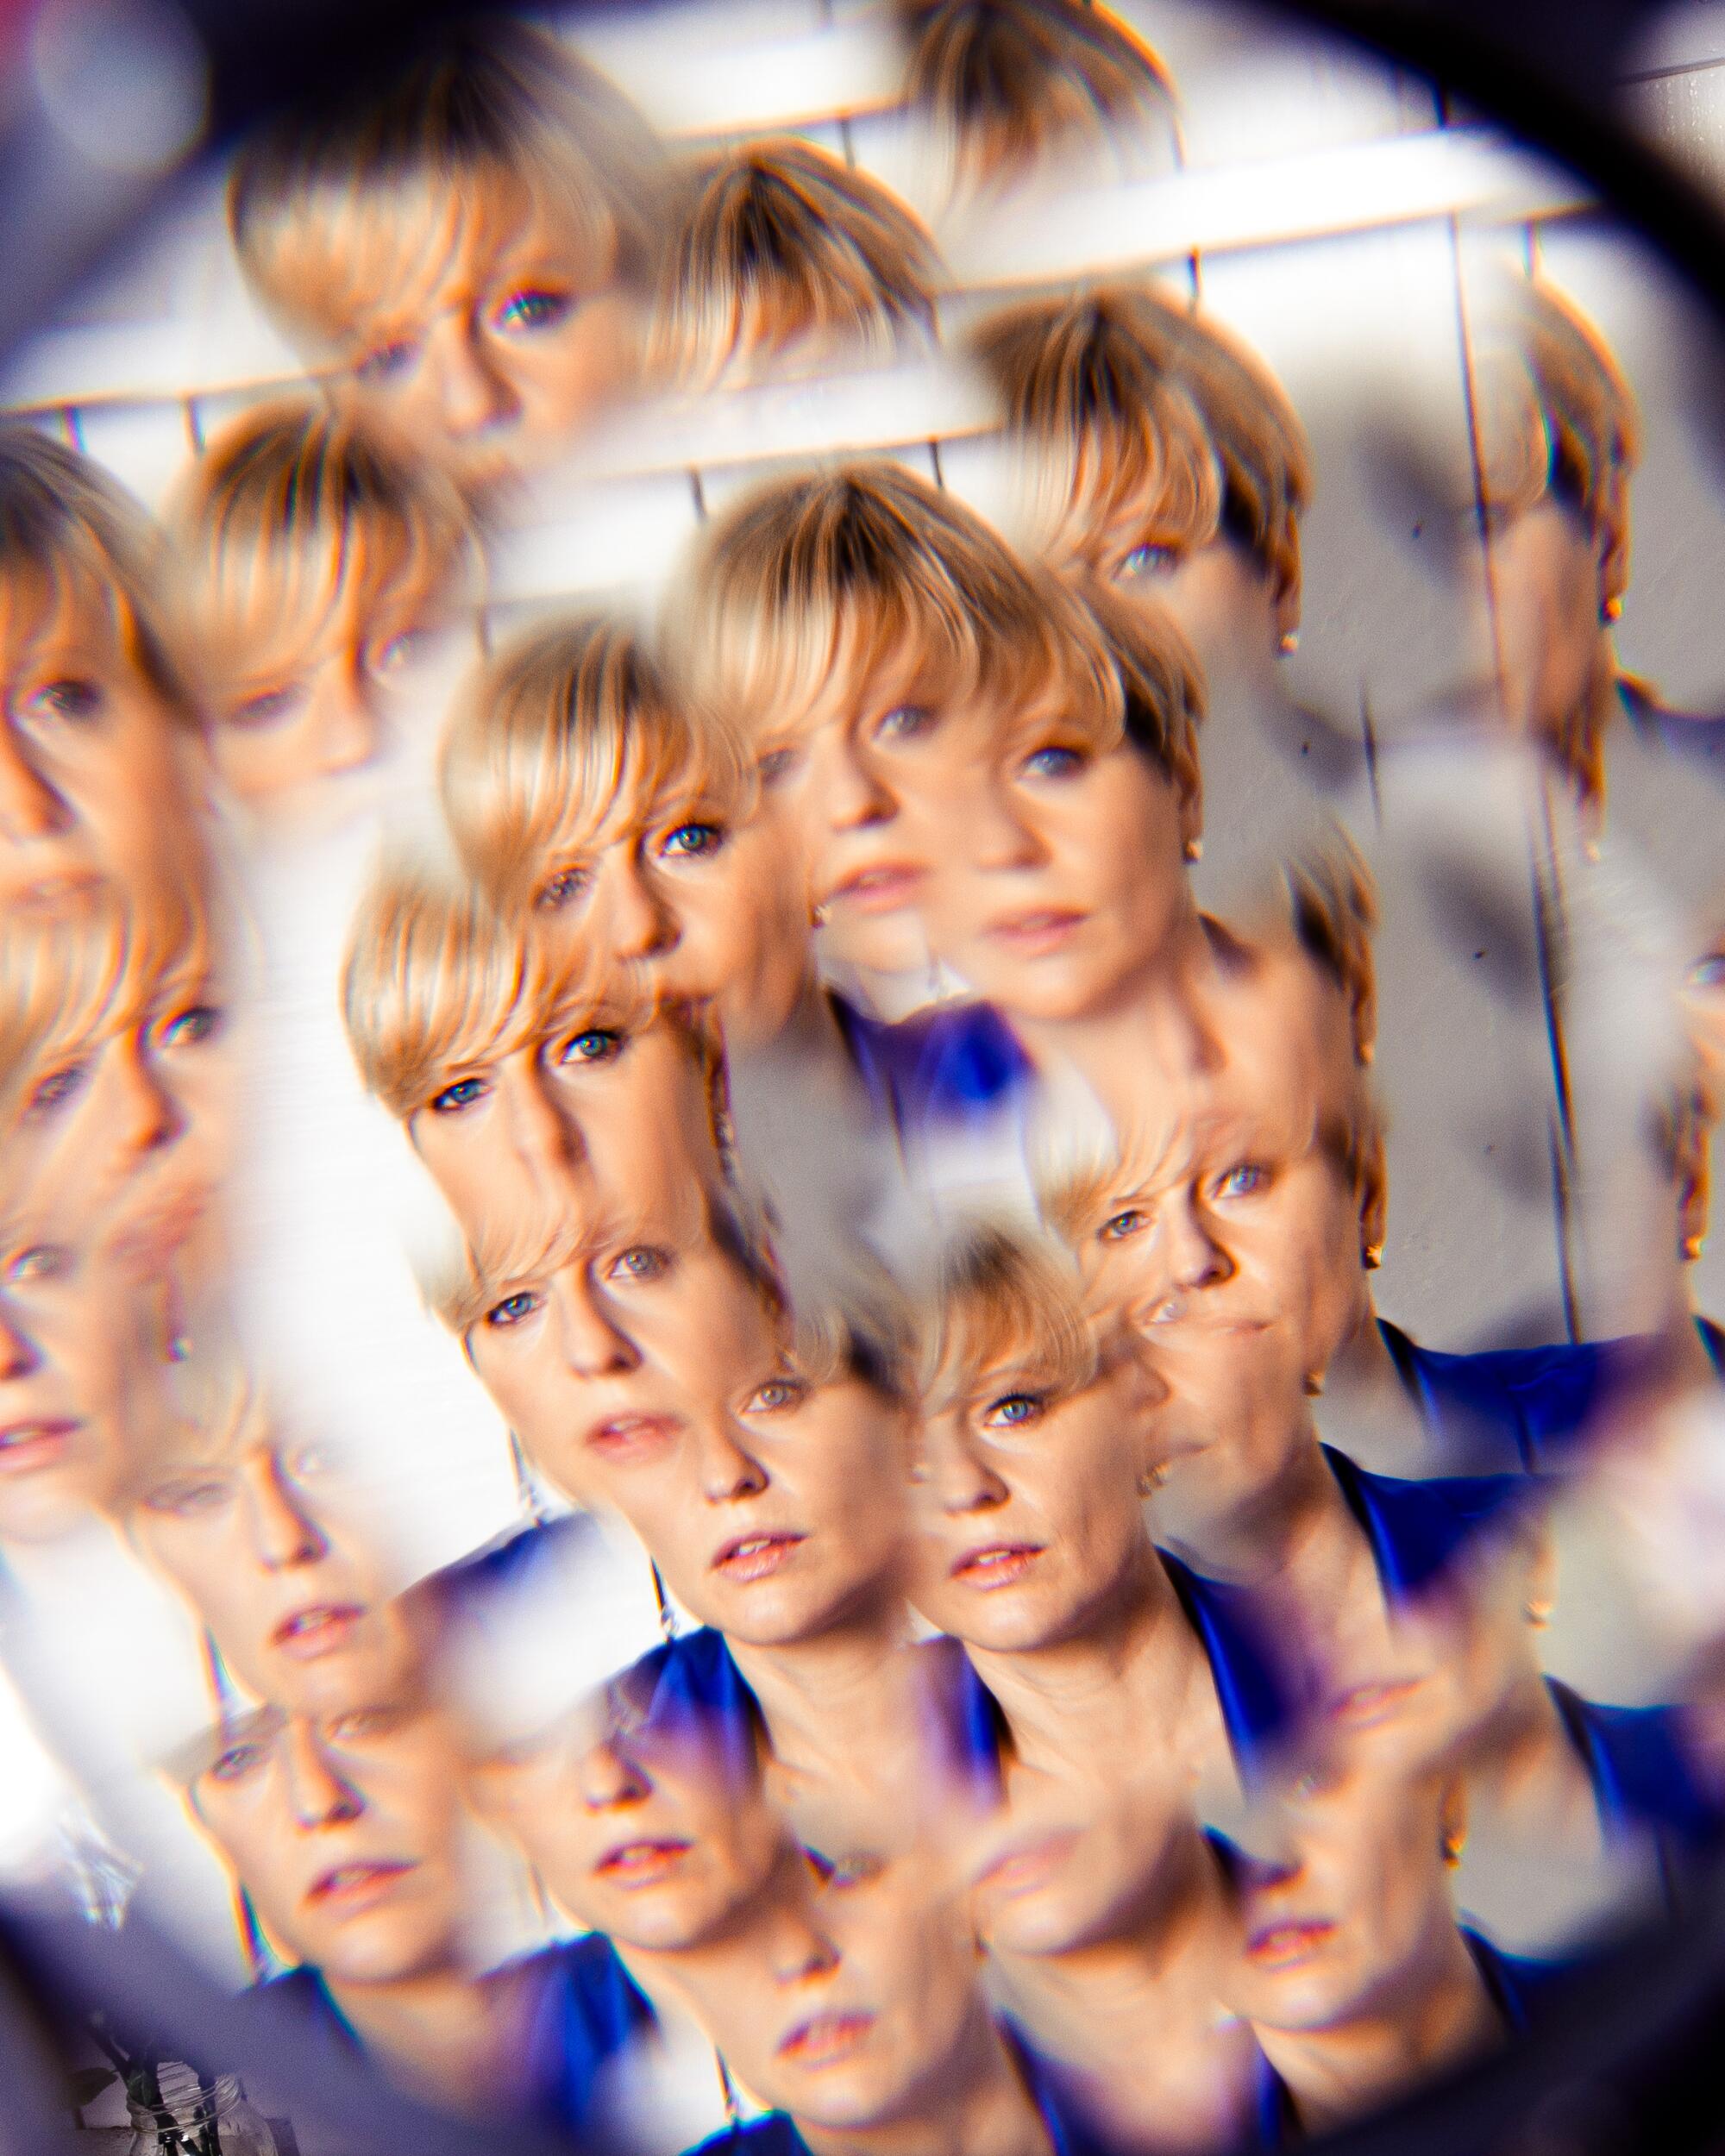 A woman viewed through a kaleidoscope-like lens.